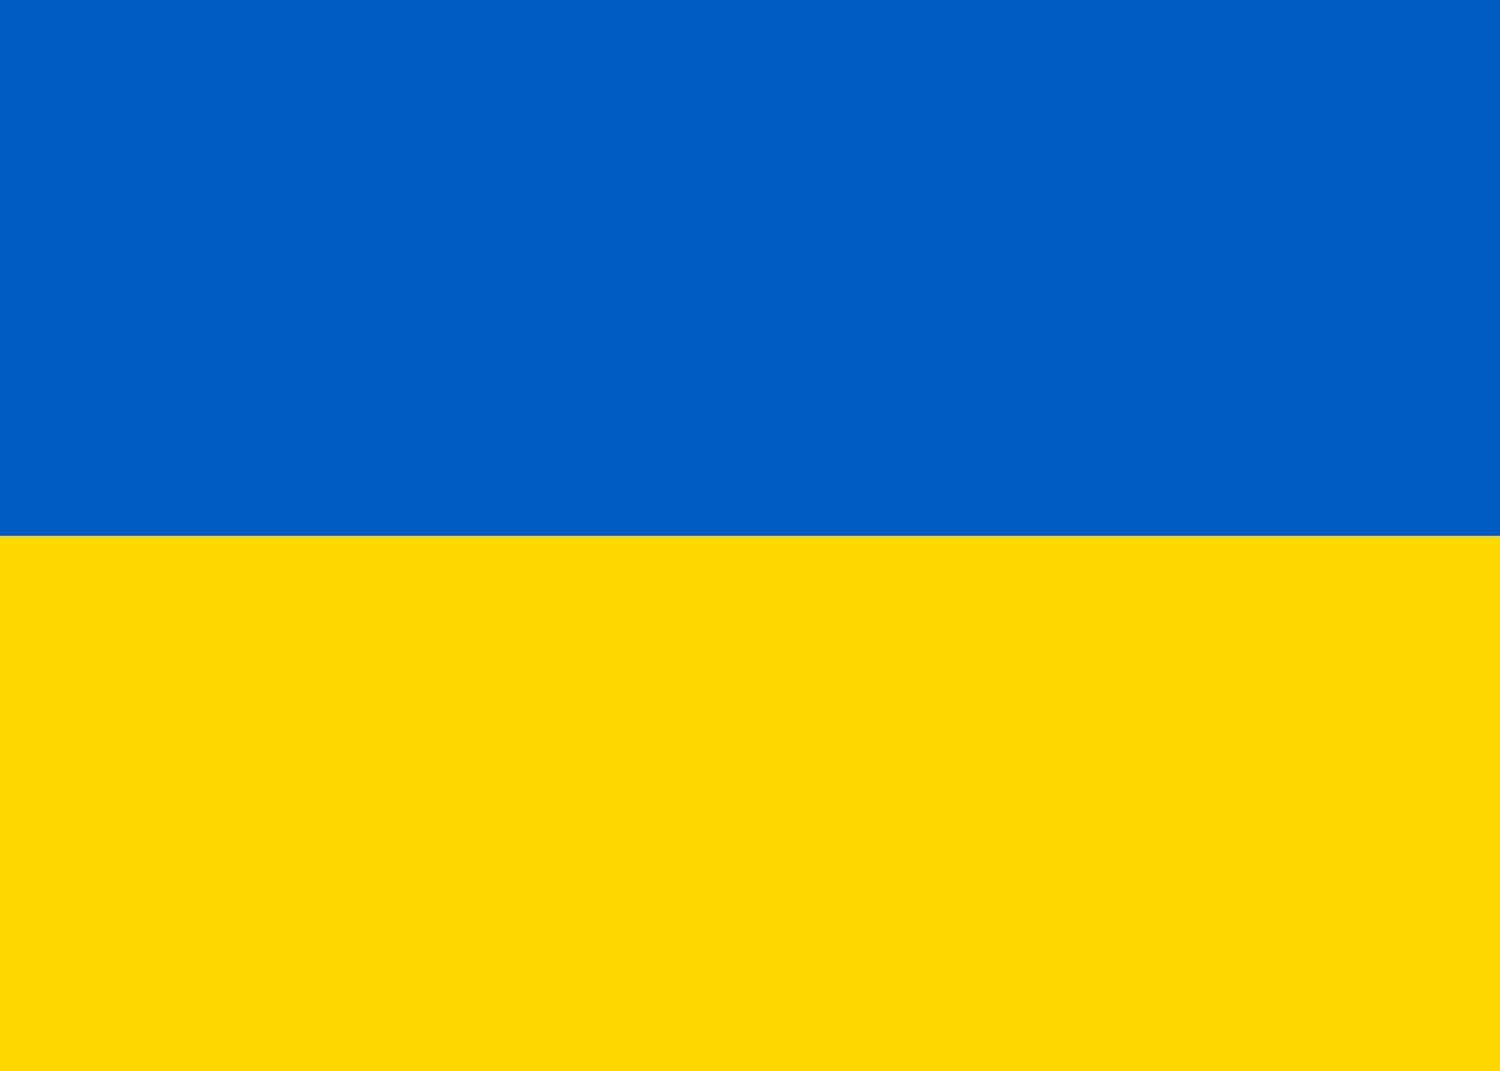 Ukrainische Flagge Foto: AdobeStock - eMIL'.